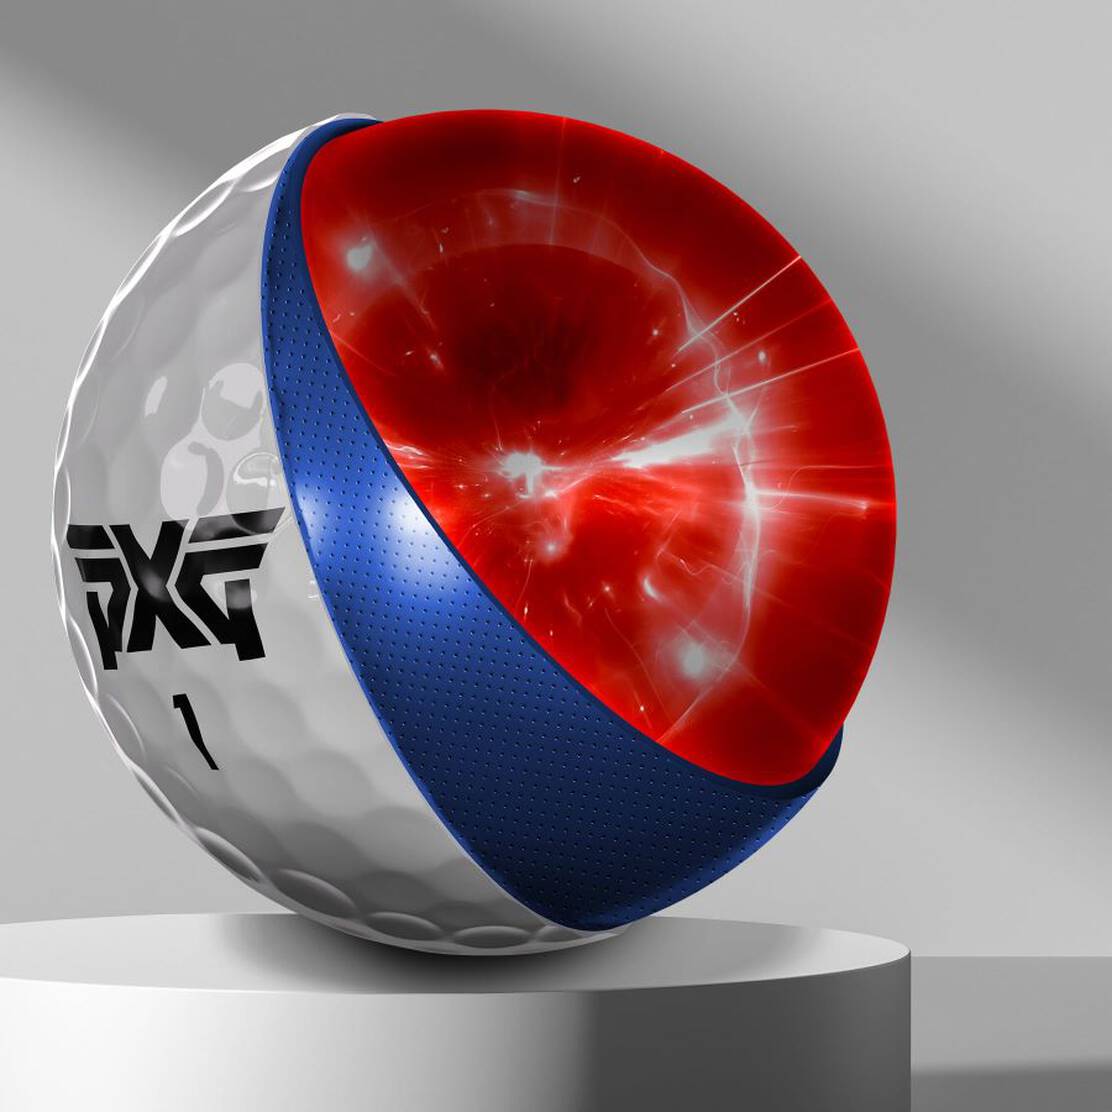 Products PXG Xtreme Premium Golf Balls - Sleeve